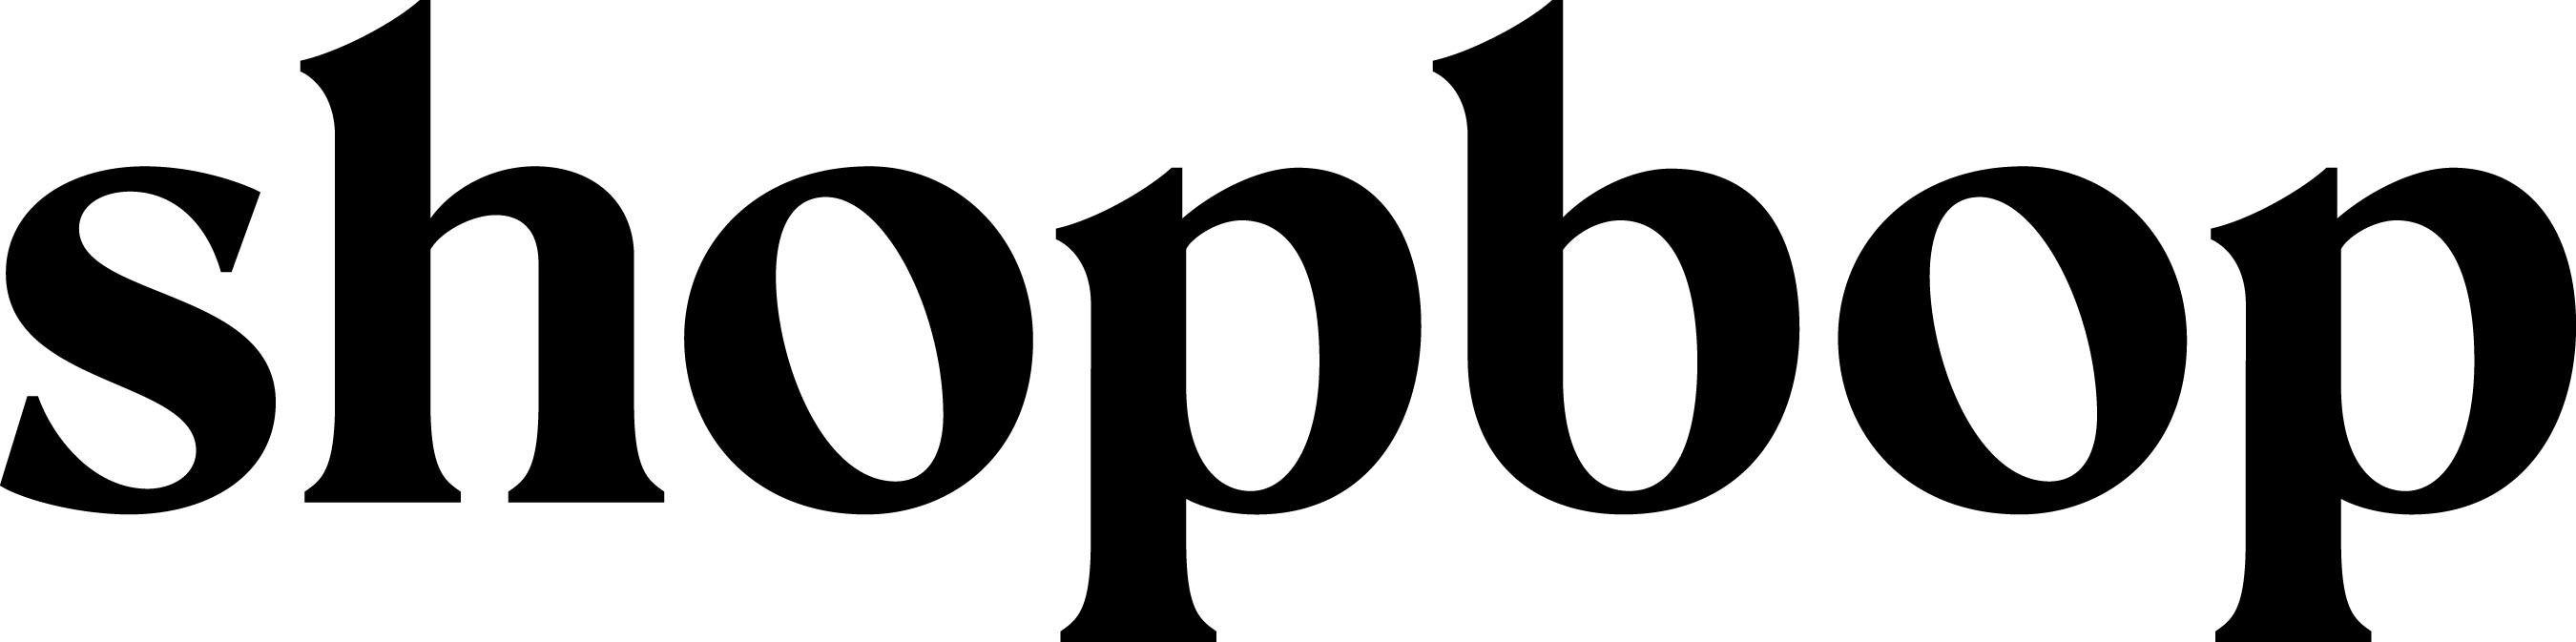 Shopbop Launches Brand Refinement